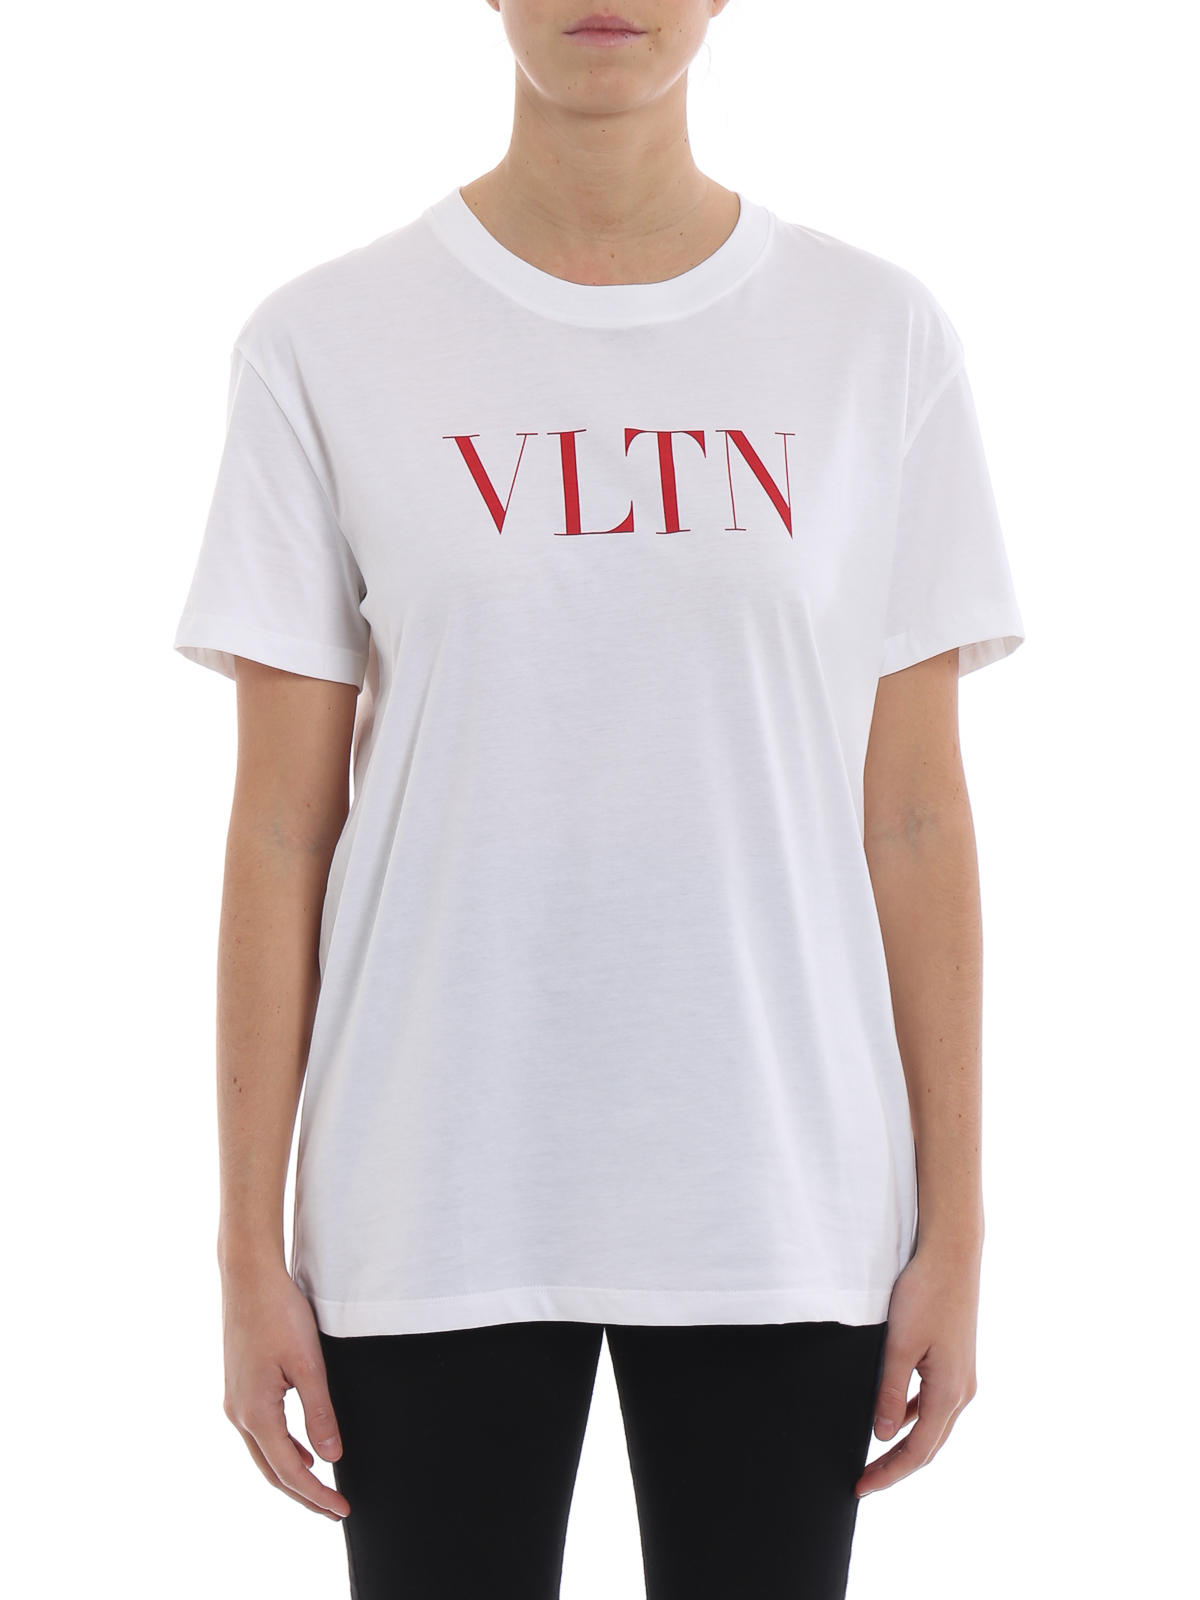 Tシャツ Valentino - Tシャツ - Vltn - RB3MG07D3V6A33 | THEBS [iKRIX]